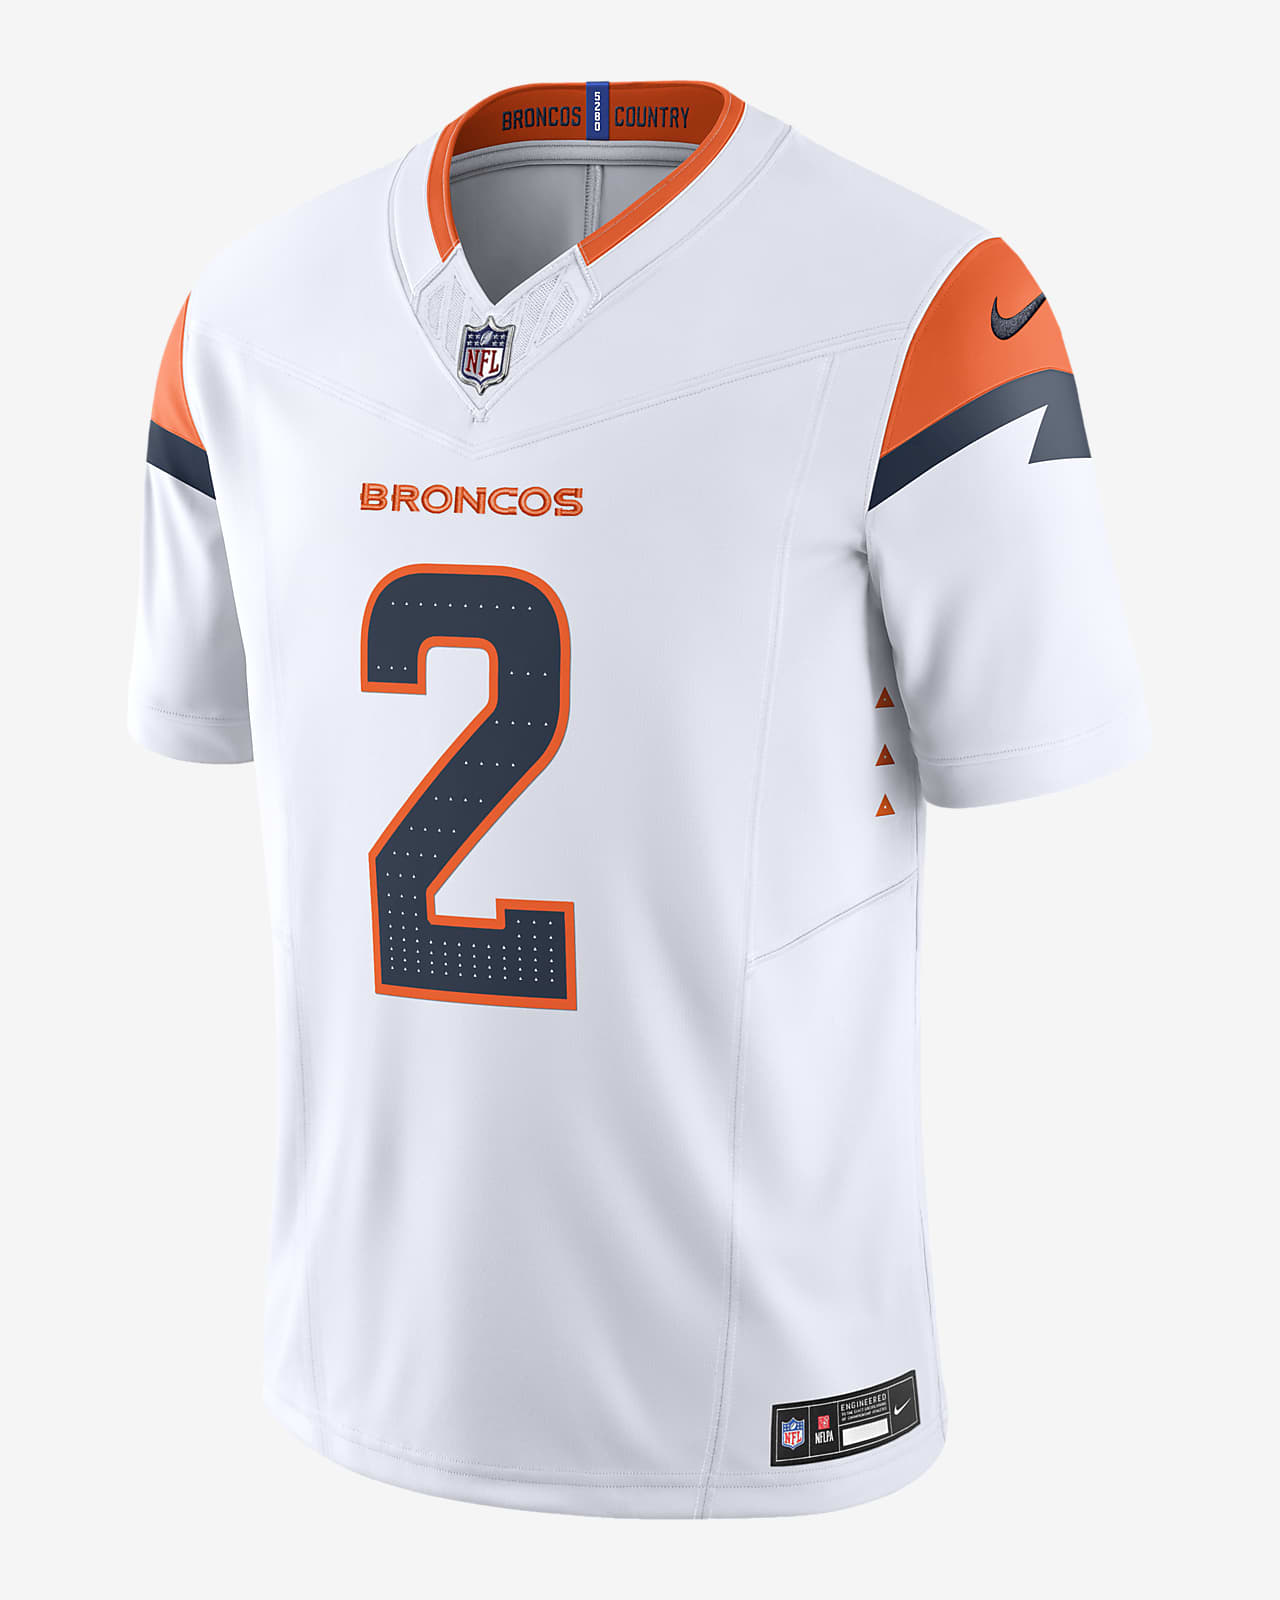 Patrick Surtain II Denver Broncos Men's Nike Dri-FIT NFL Limited Football Jersey